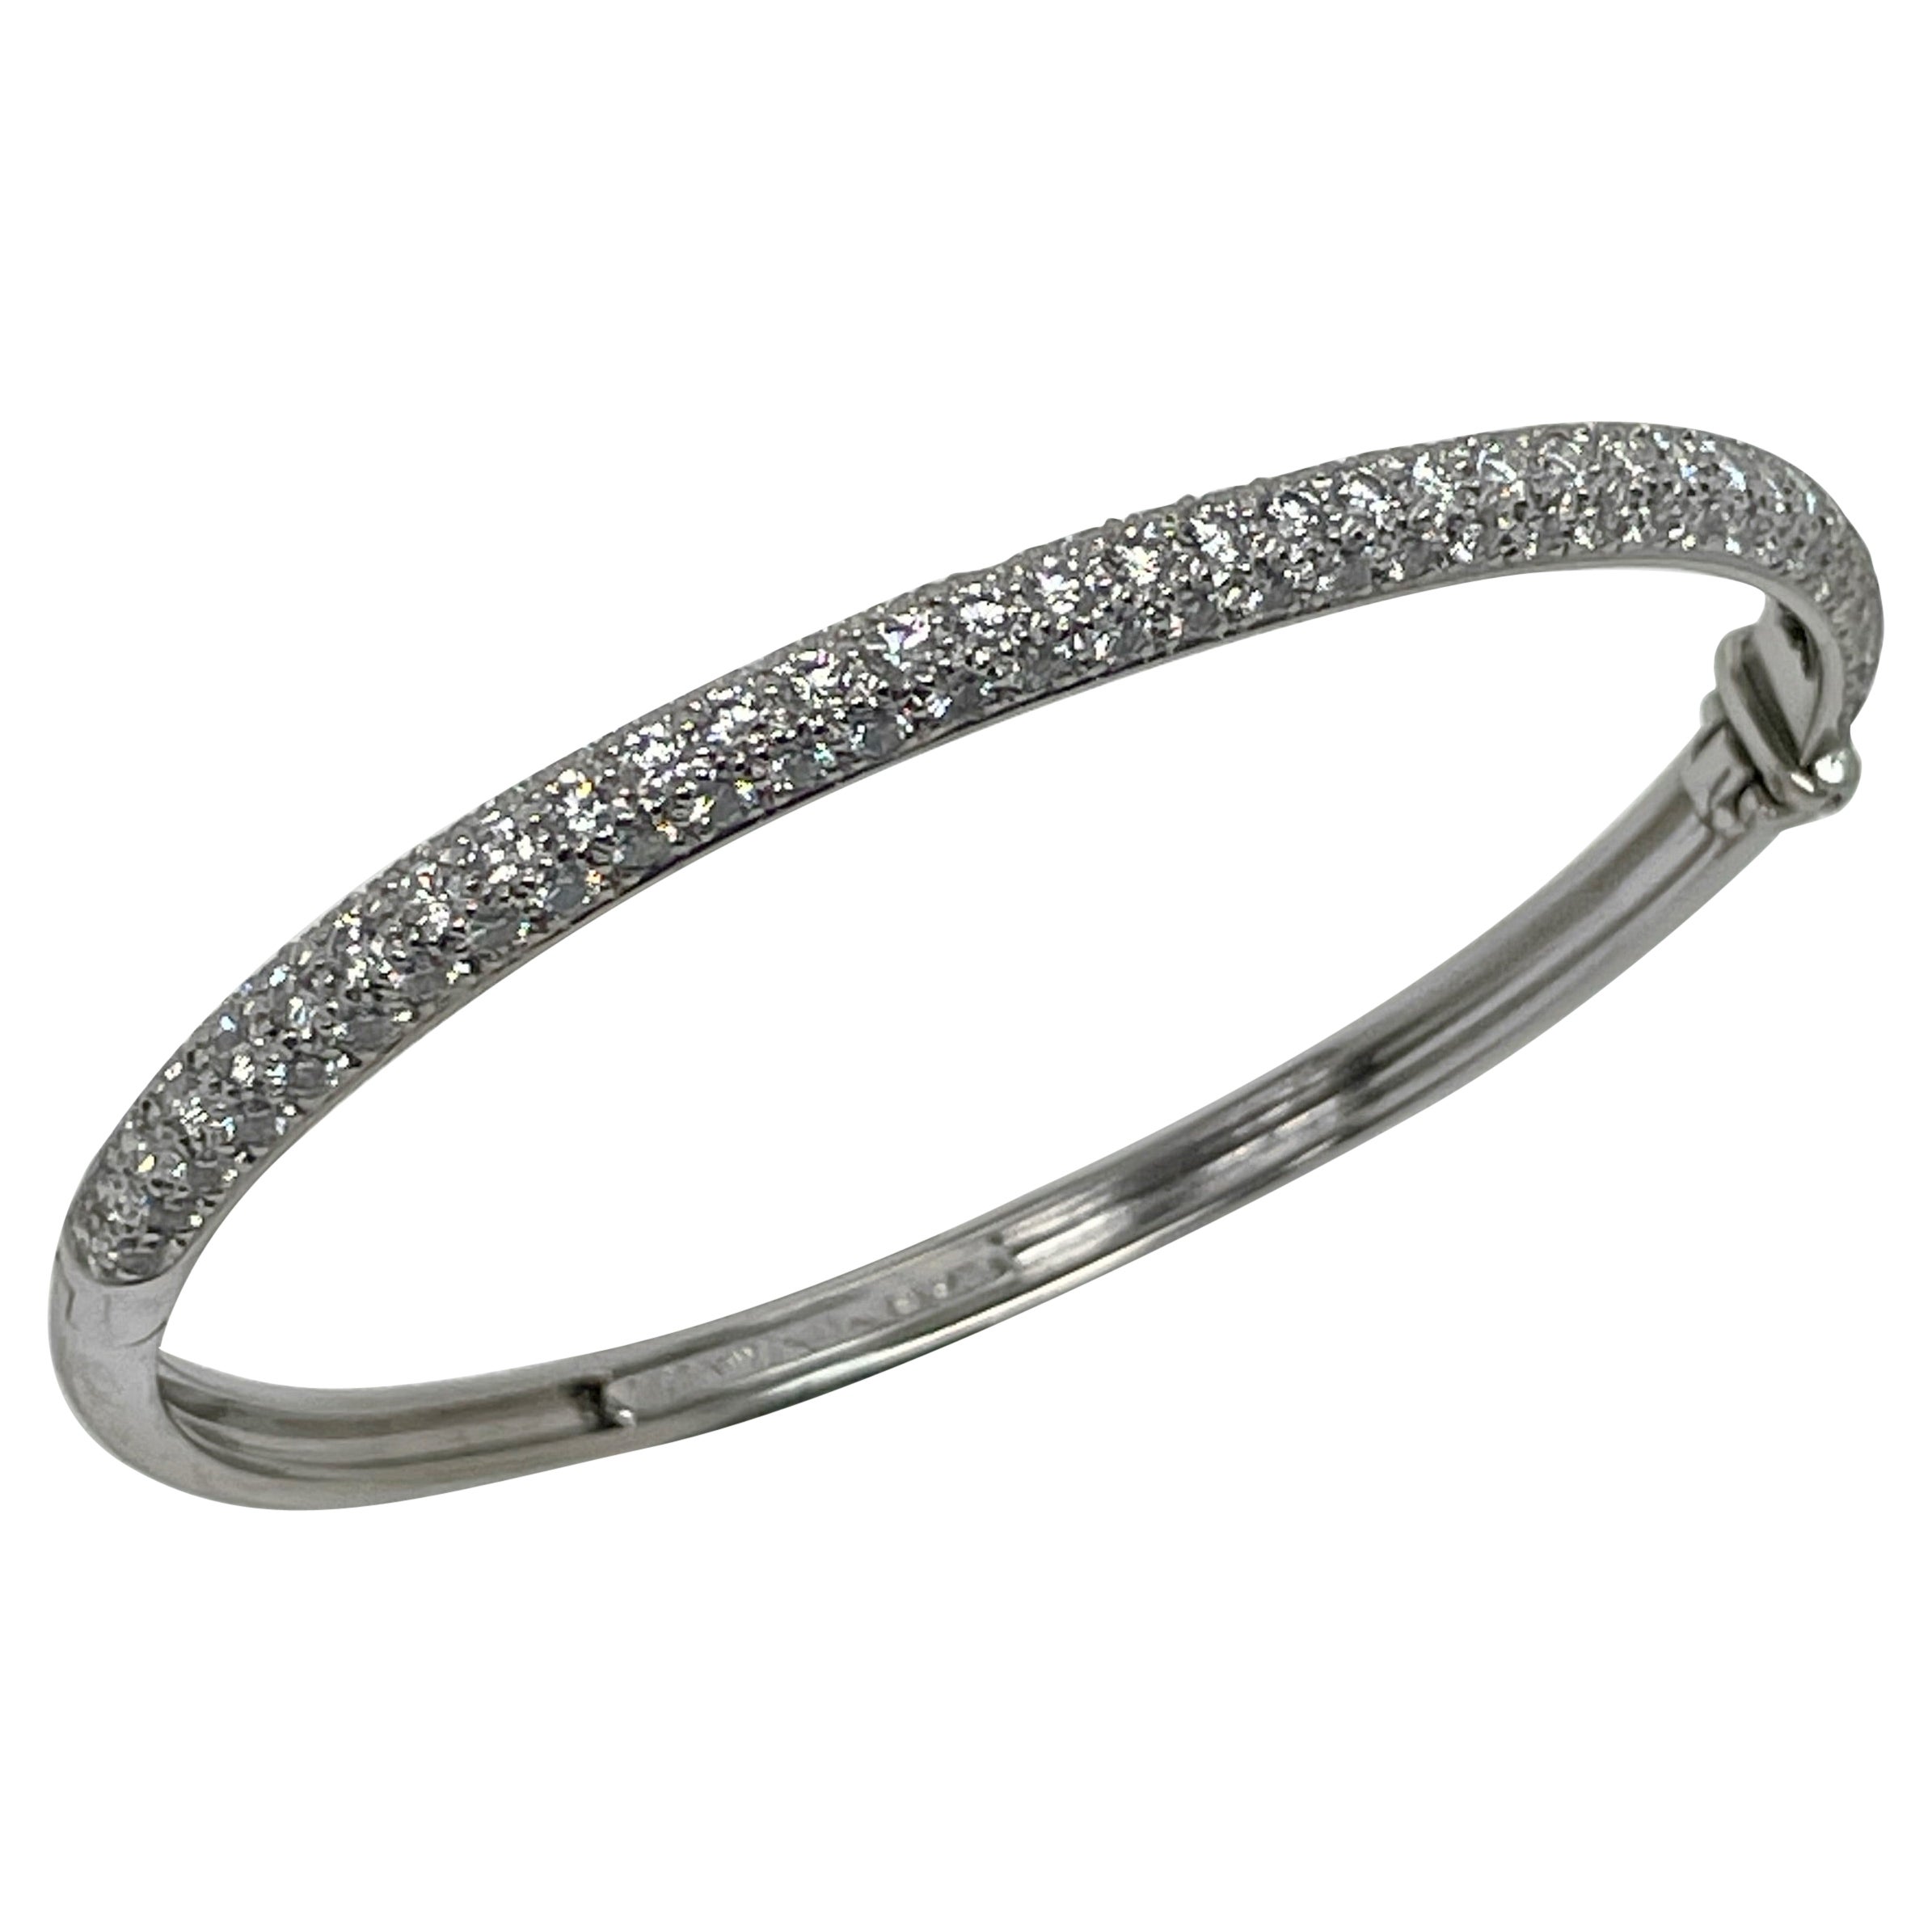 Tiffany & Co., Platinum and Diamond Bangle Bracelet